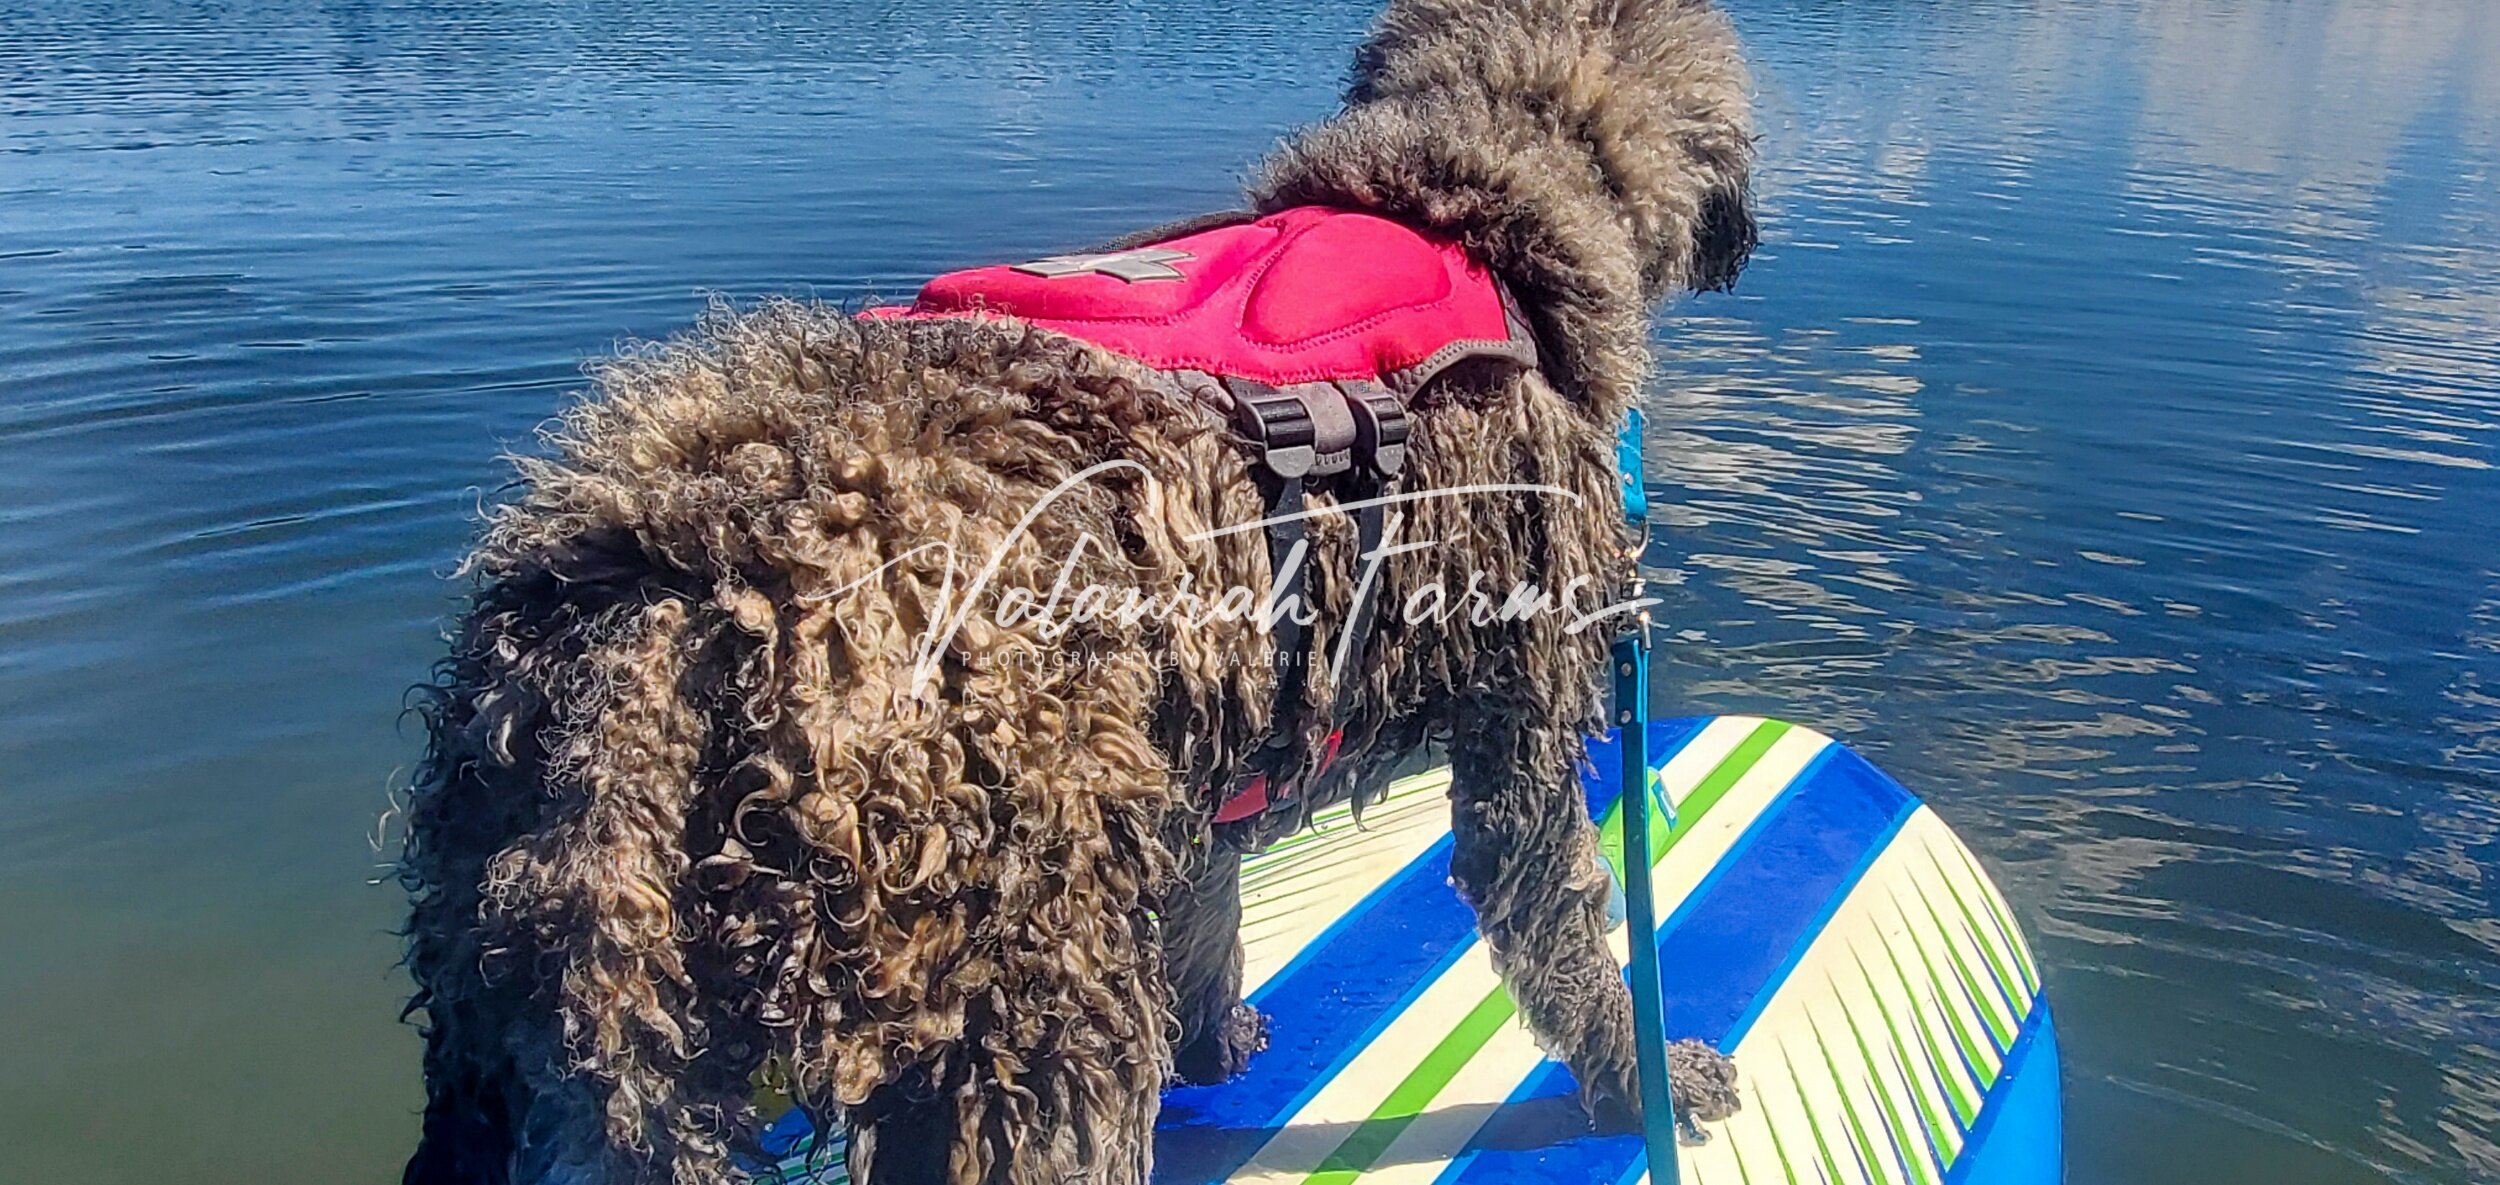 Blue Merle Standard Poodle on Paddleboard